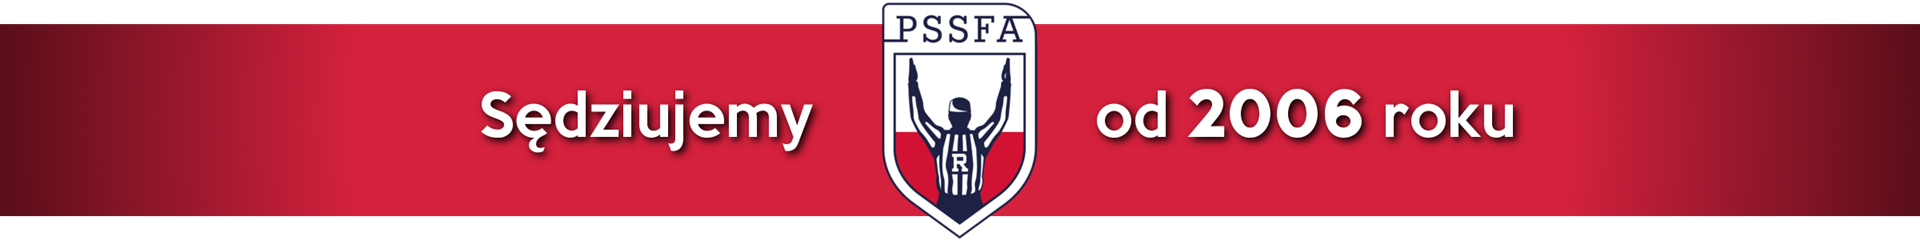 PSSFA Logo